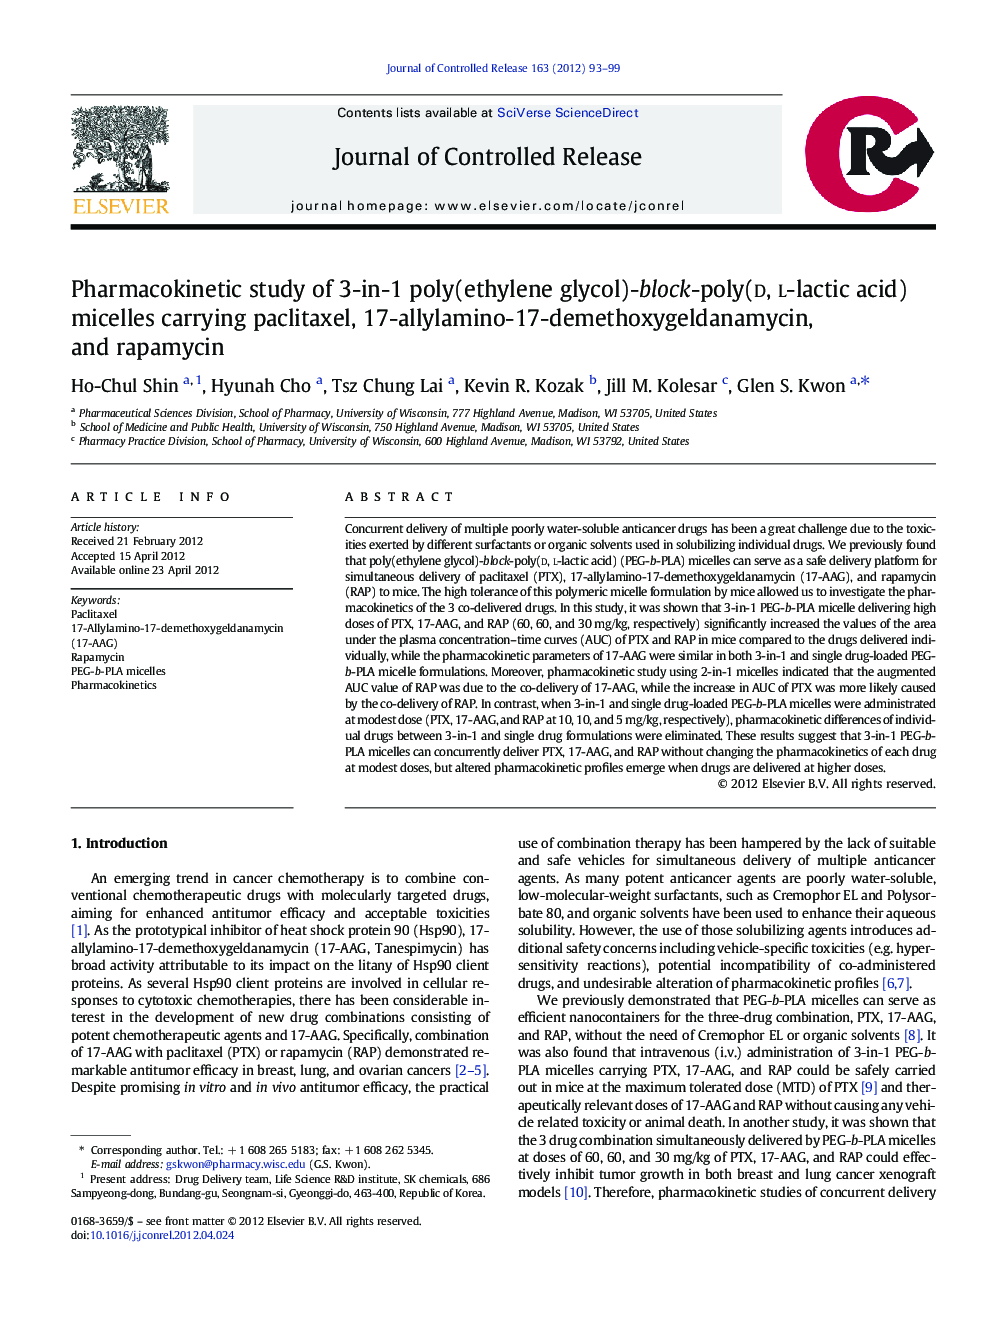 Pharmacokinetic study of 3-in-1 poly(ethylene glycol)-block-poly(D, L-lactic acid) micelles carrying paclitaxel, 17-allylamino-17-demethoxygeldanamycin, and rapamycin